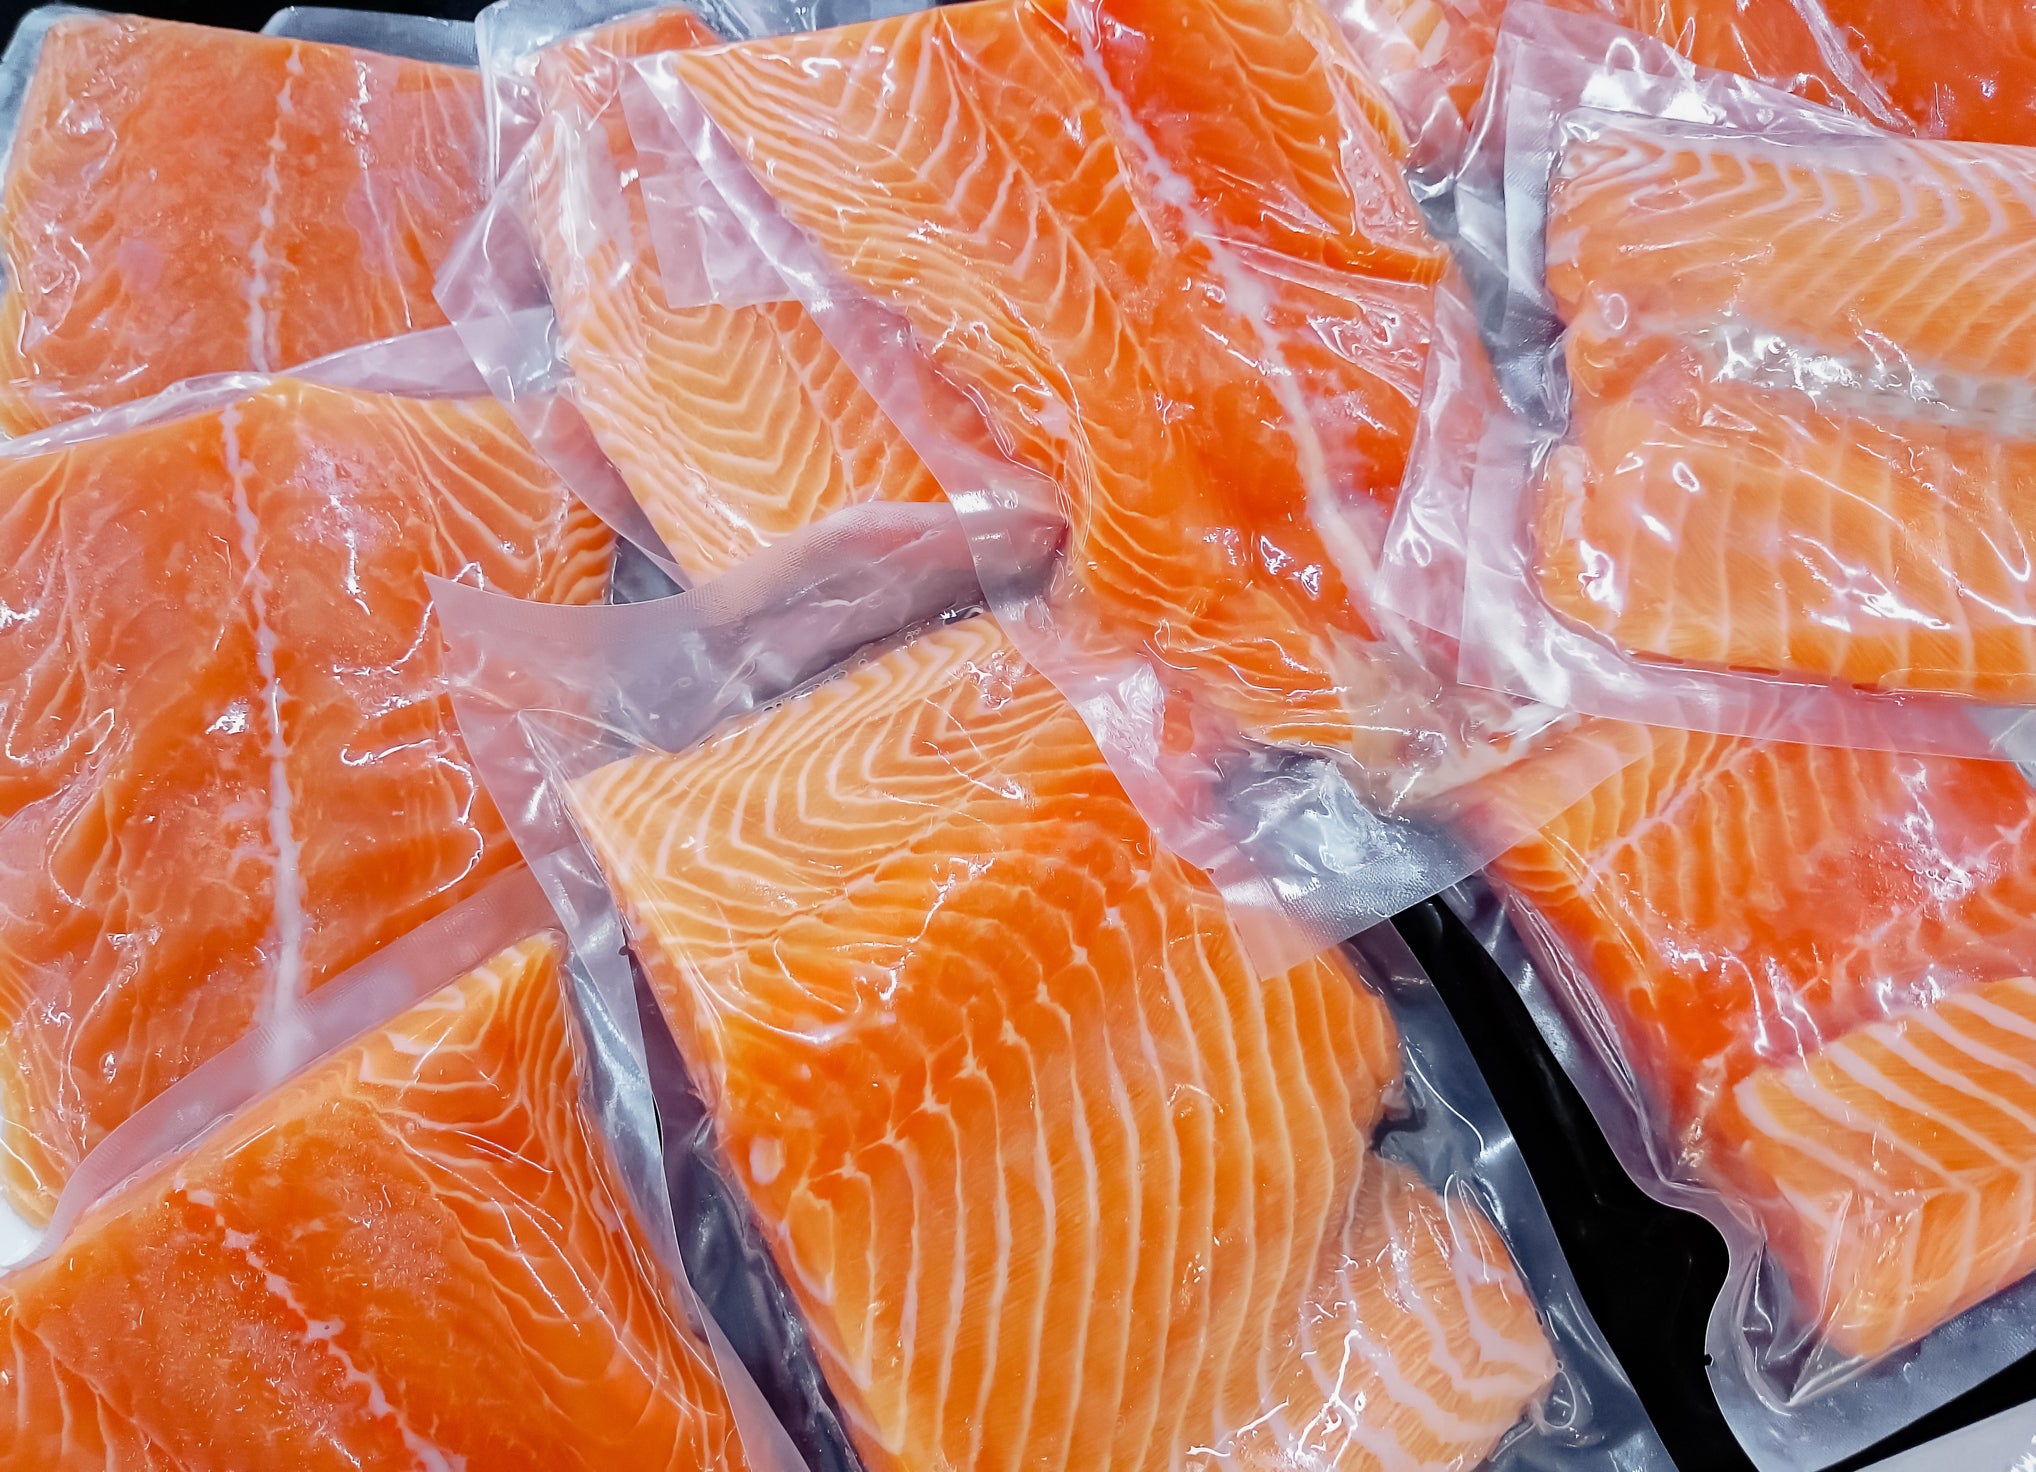 Salmon in plastic packaging